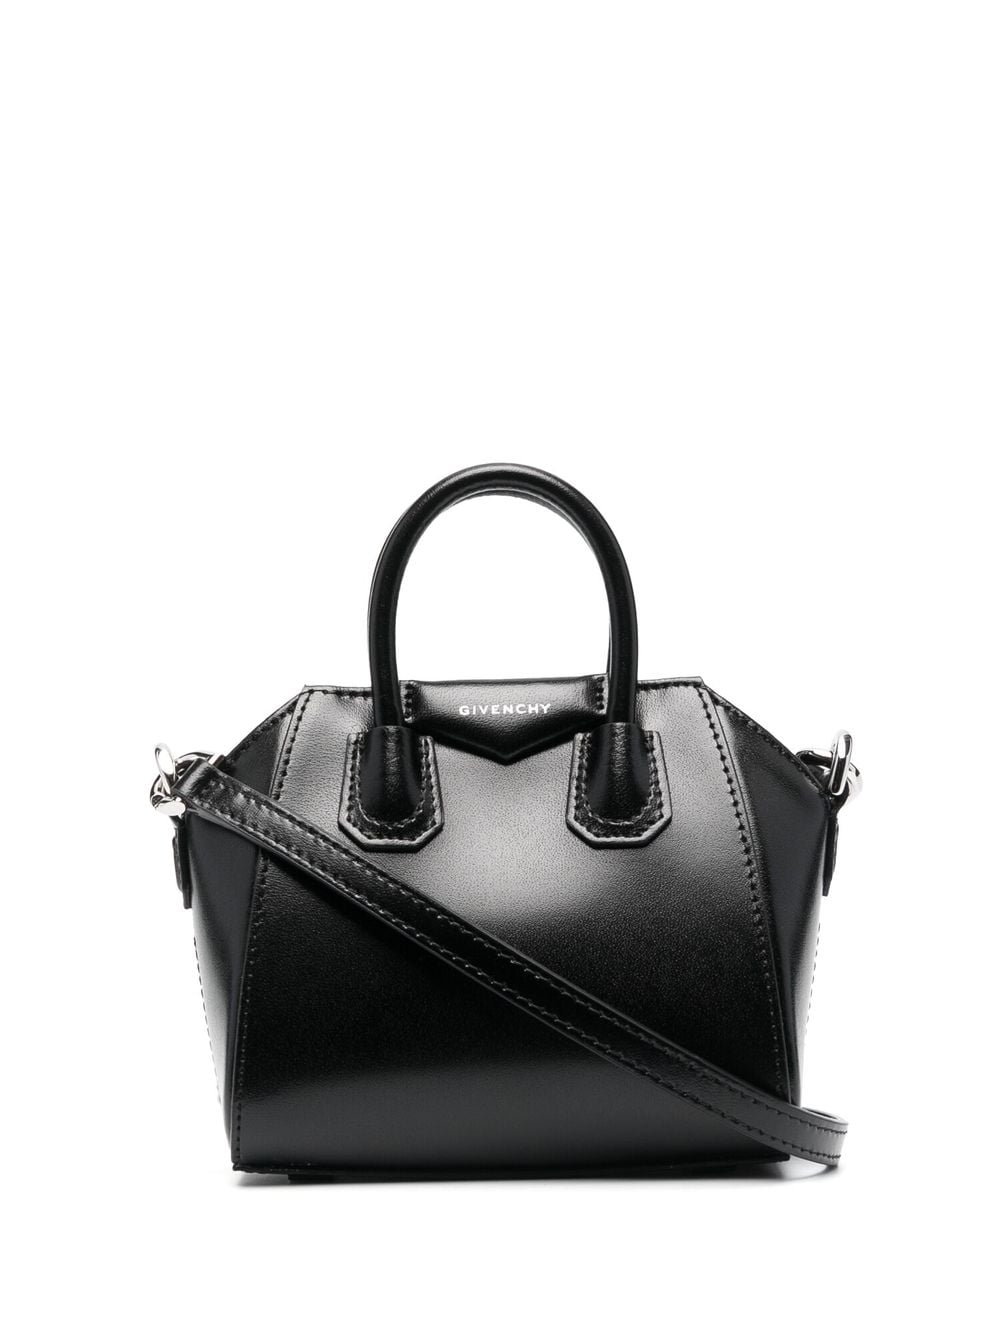 Givenchy Micro Antigona Box Leather Tote Bag In Black